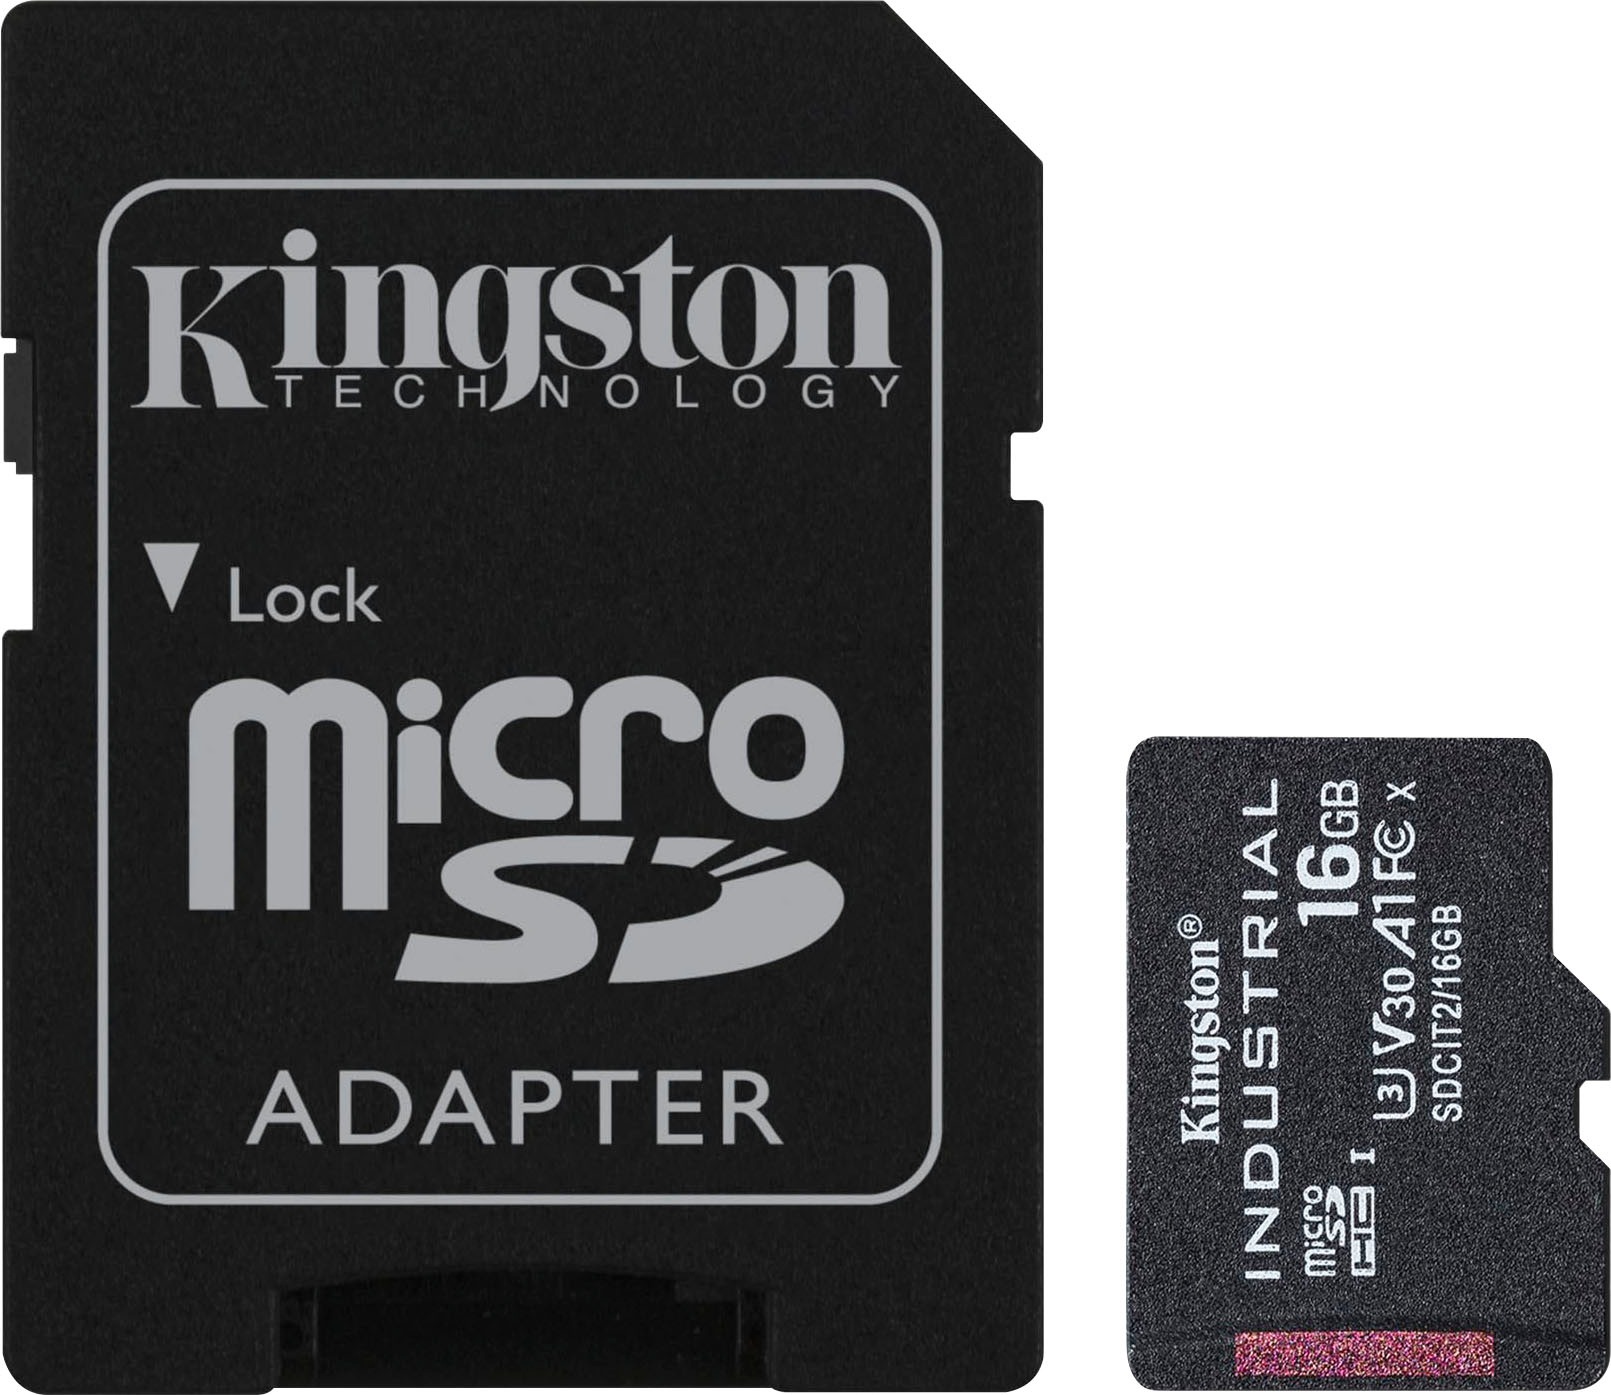 Kingston Speicherkarte »INDUSTRIAL microSD 16GB + SD Adapter«, (UHS-I Class 10 100 MB/s Lesegeschwindigkeit)